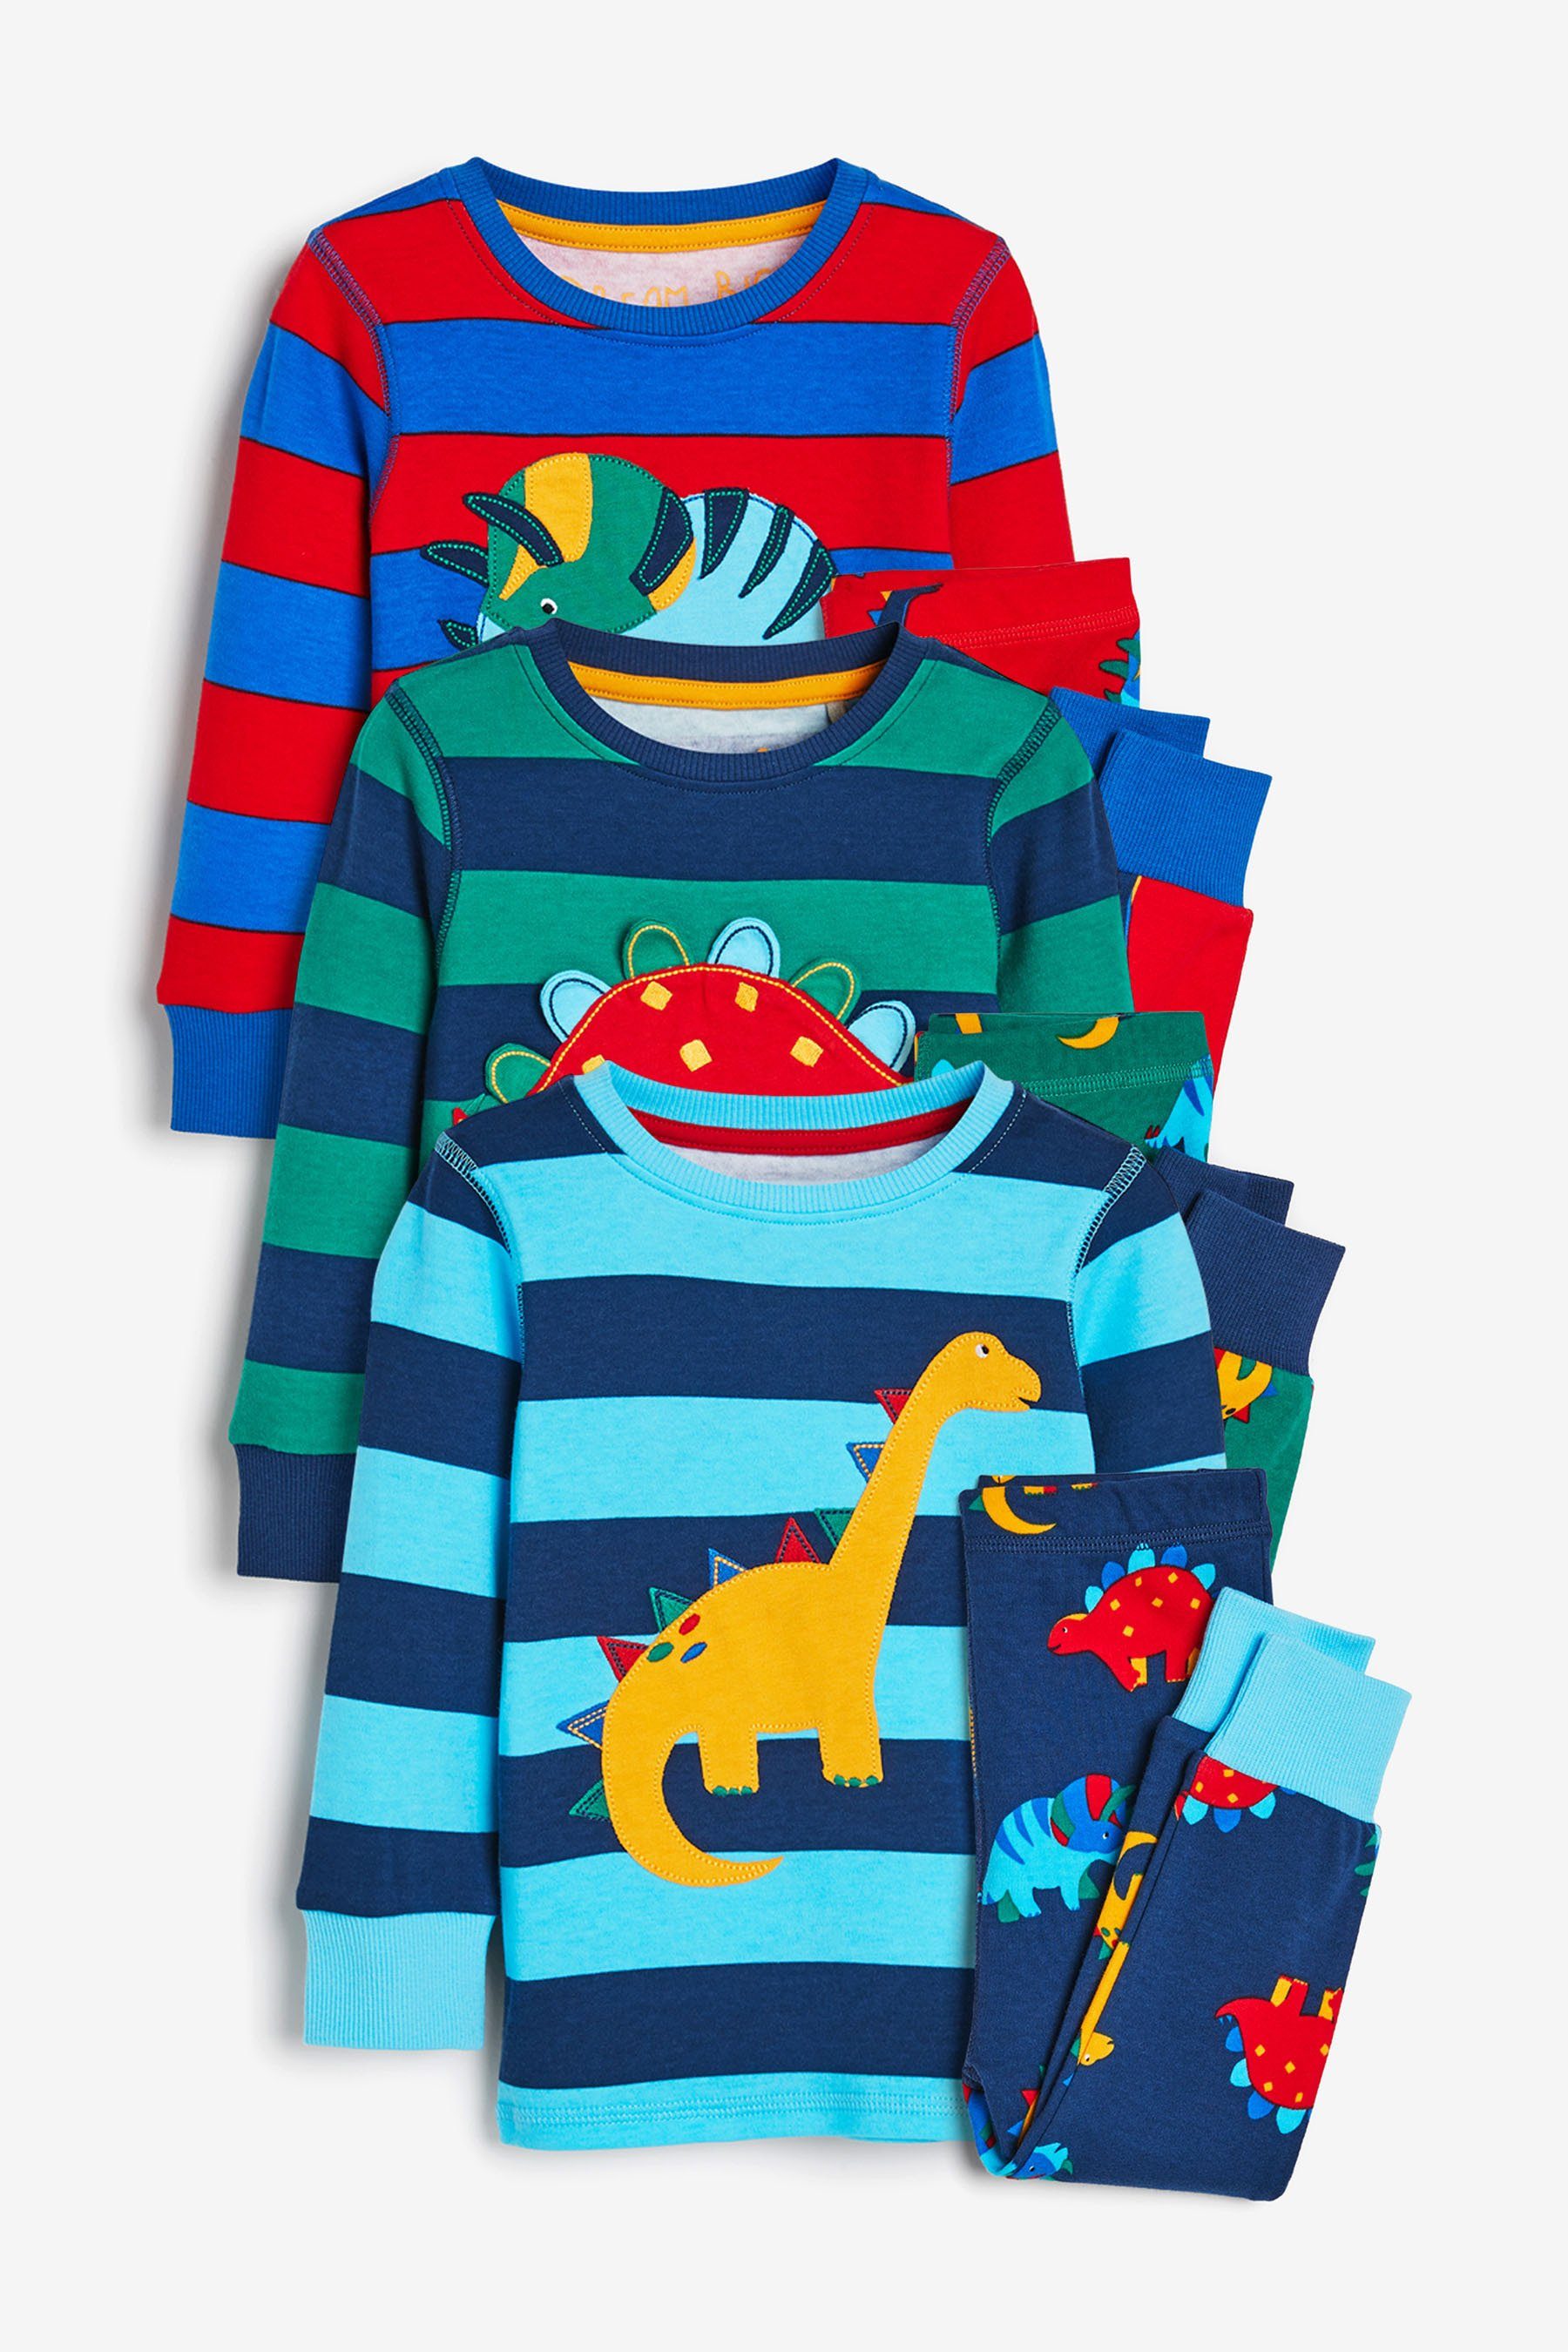 tlg) Pyjama Dino 3er-Pack Blue/Red/Green Kuschelpyjamas, Stripe (6 Next